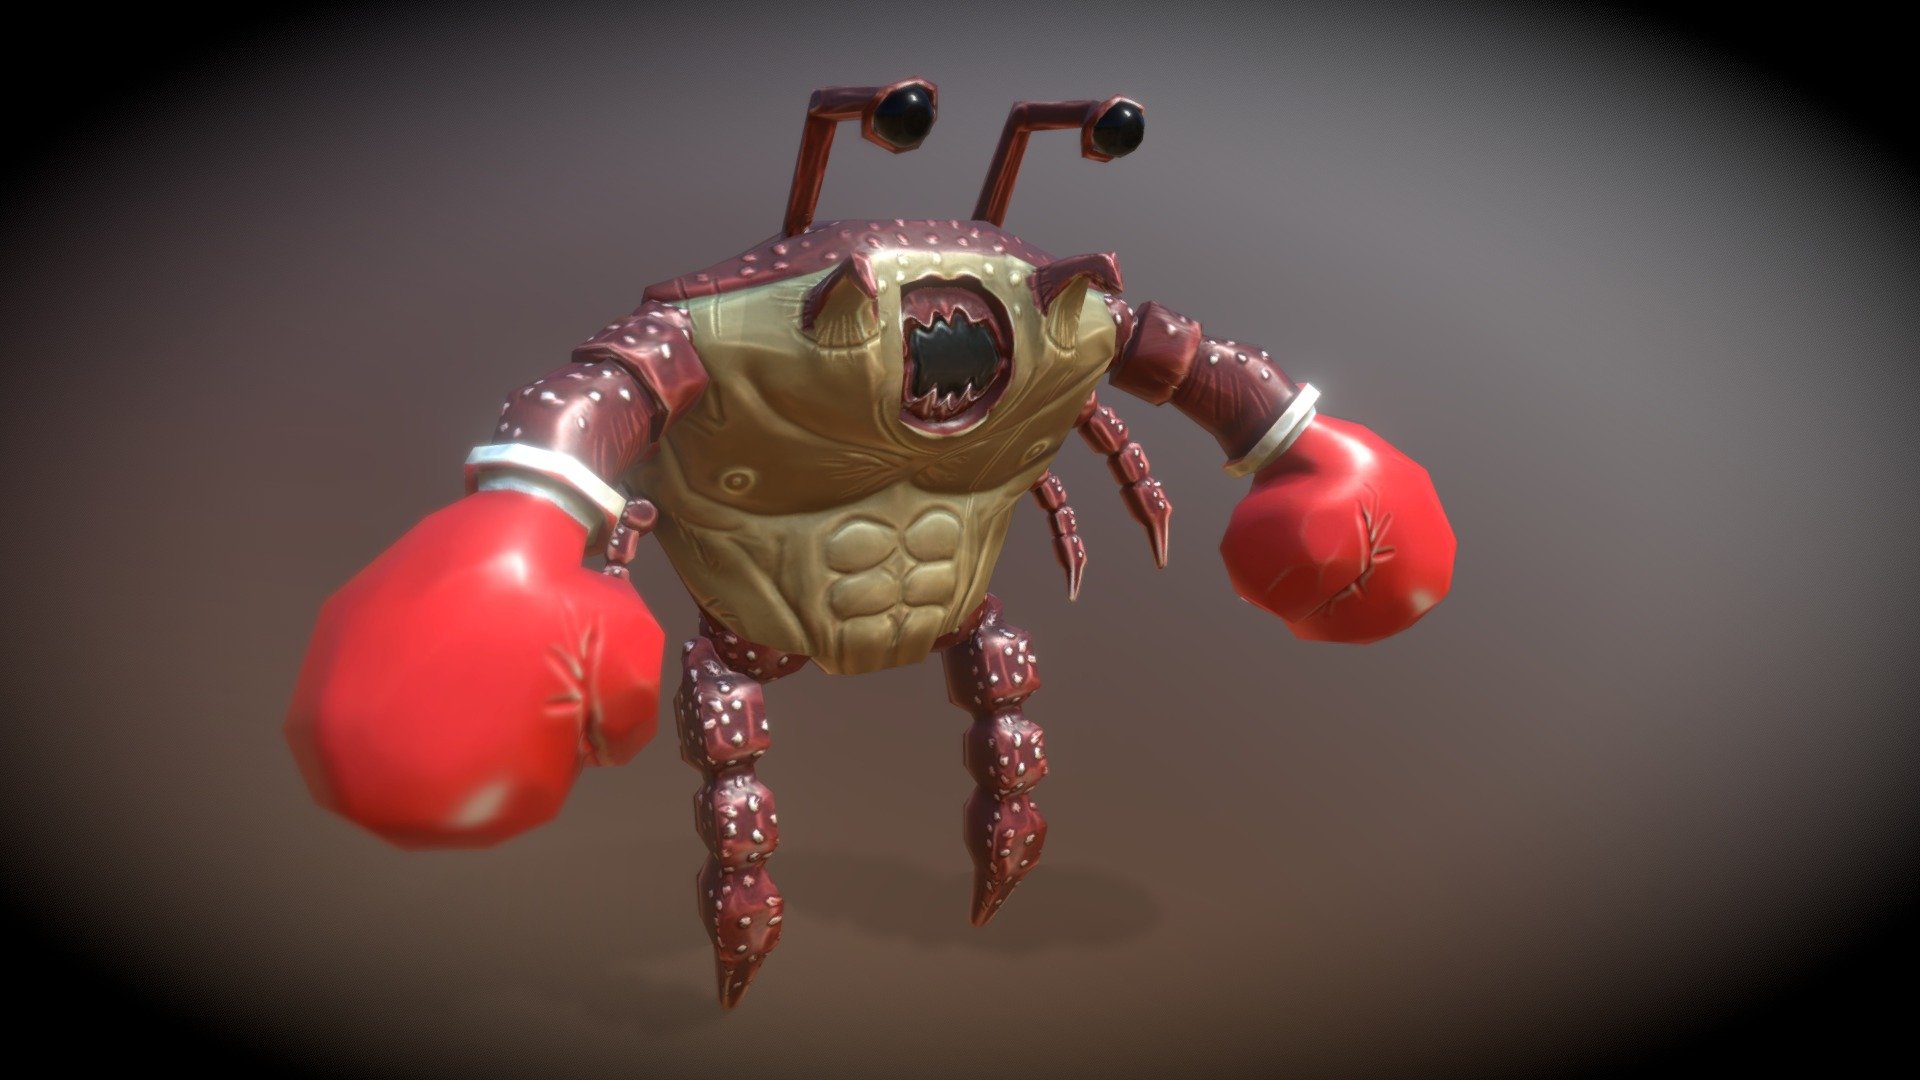 Boxer Crab